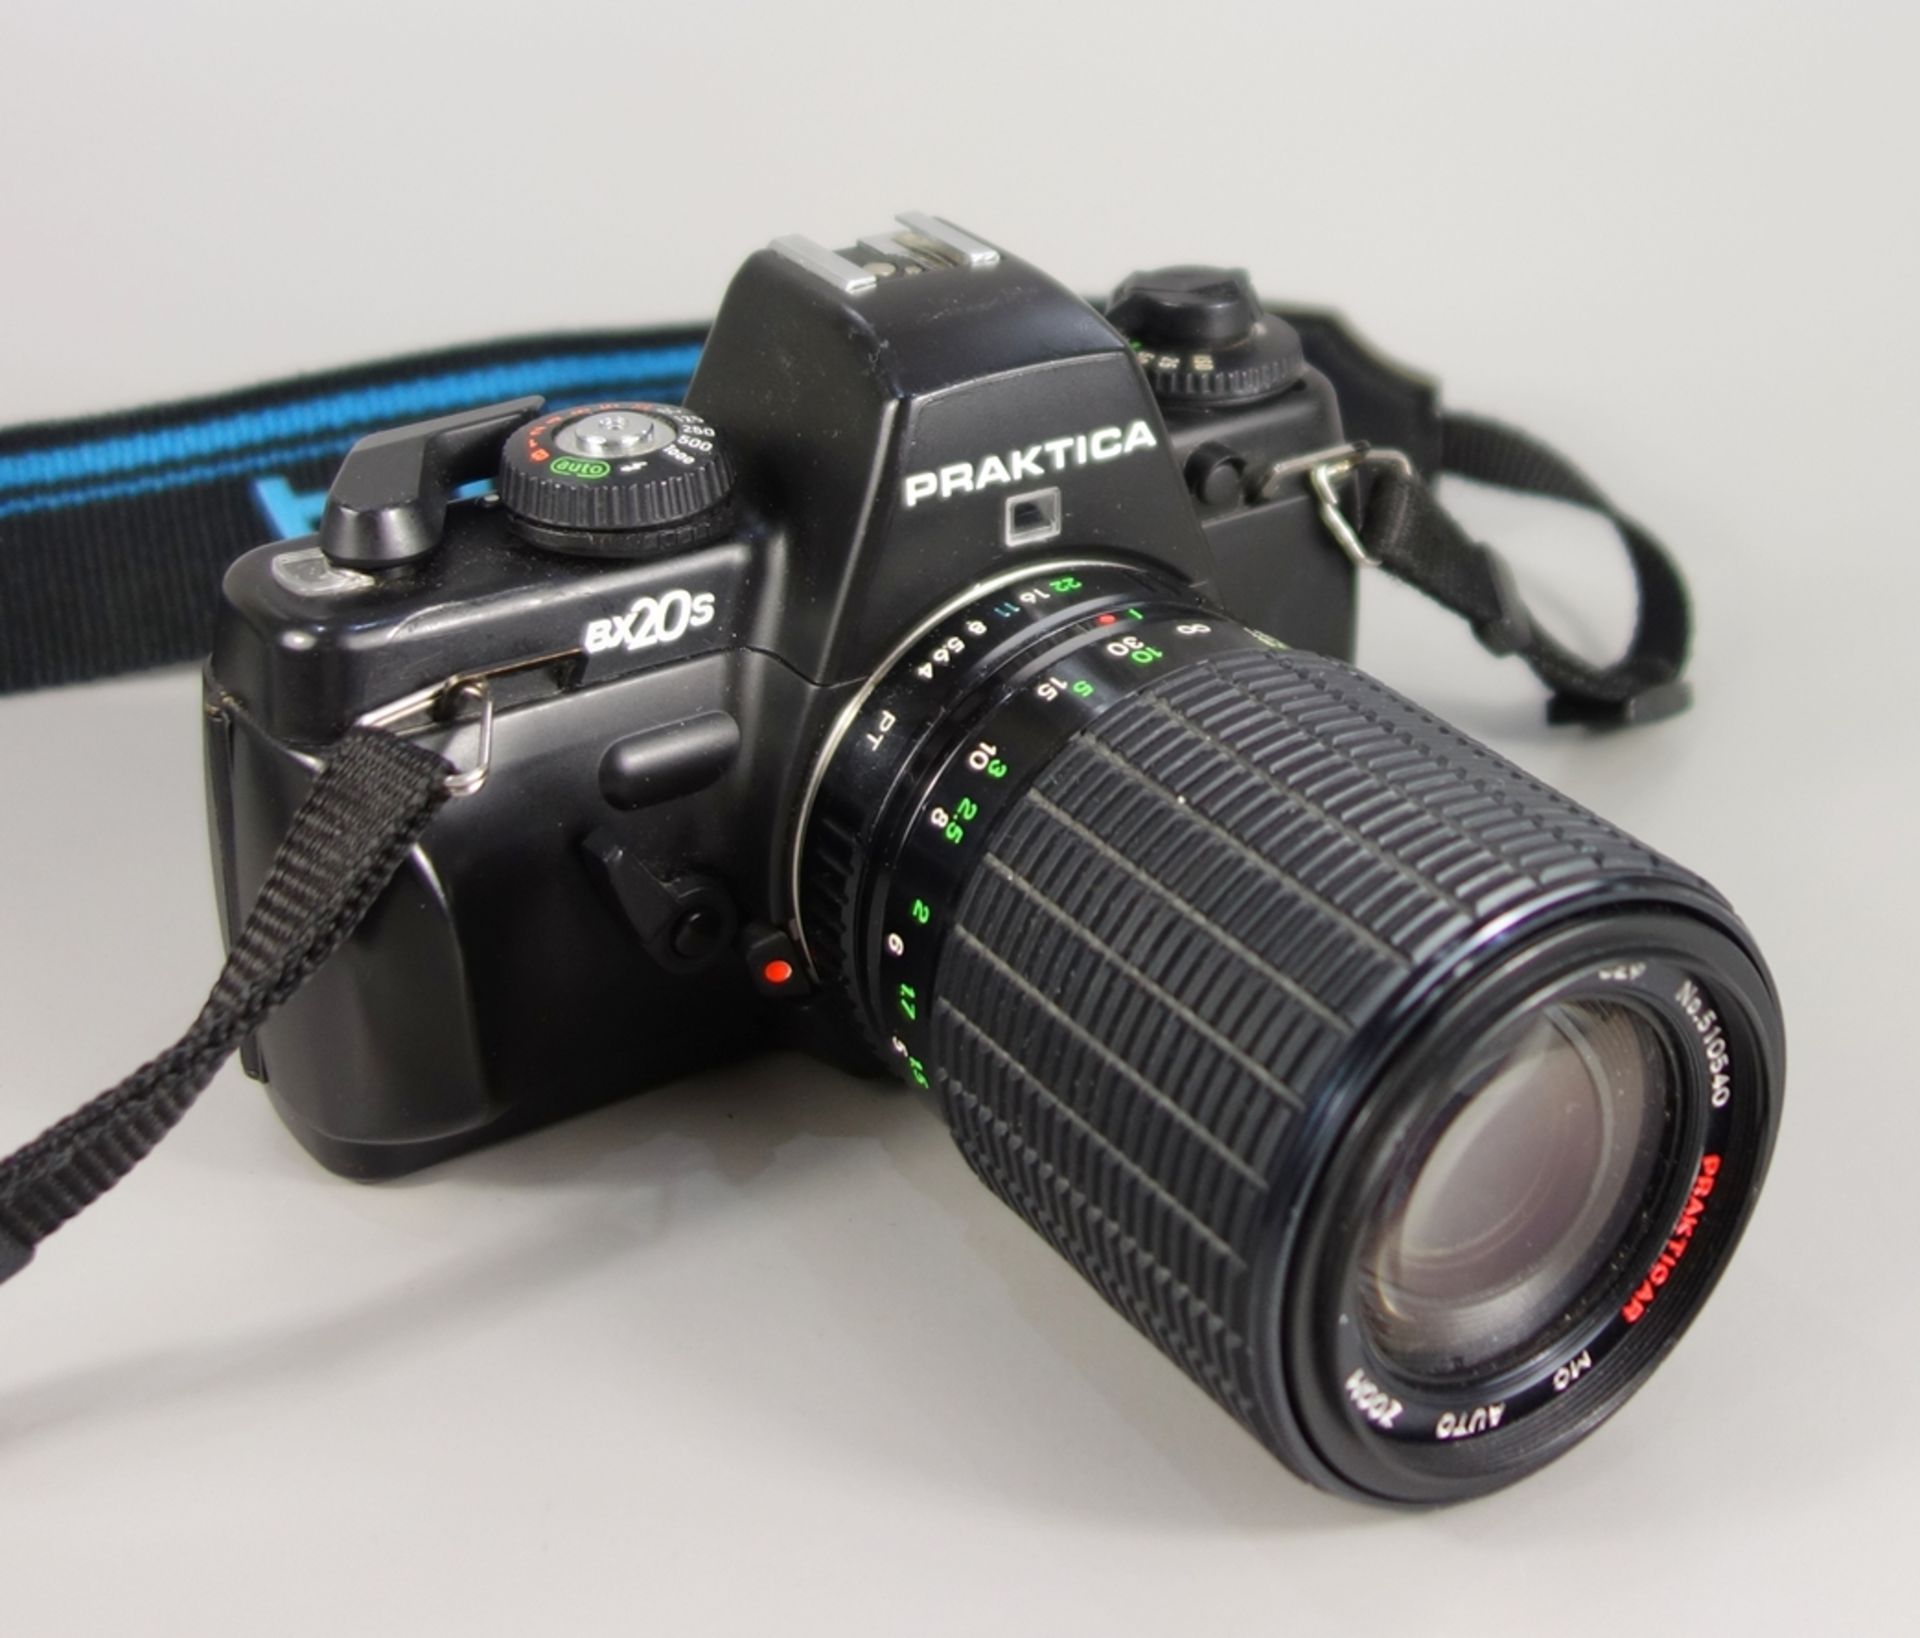 Praktica BX 20s, analoge Spiegelreflexkamera, 1990er Jahre, mit Objektiv Praktika MC Auto Zoom 1:4,